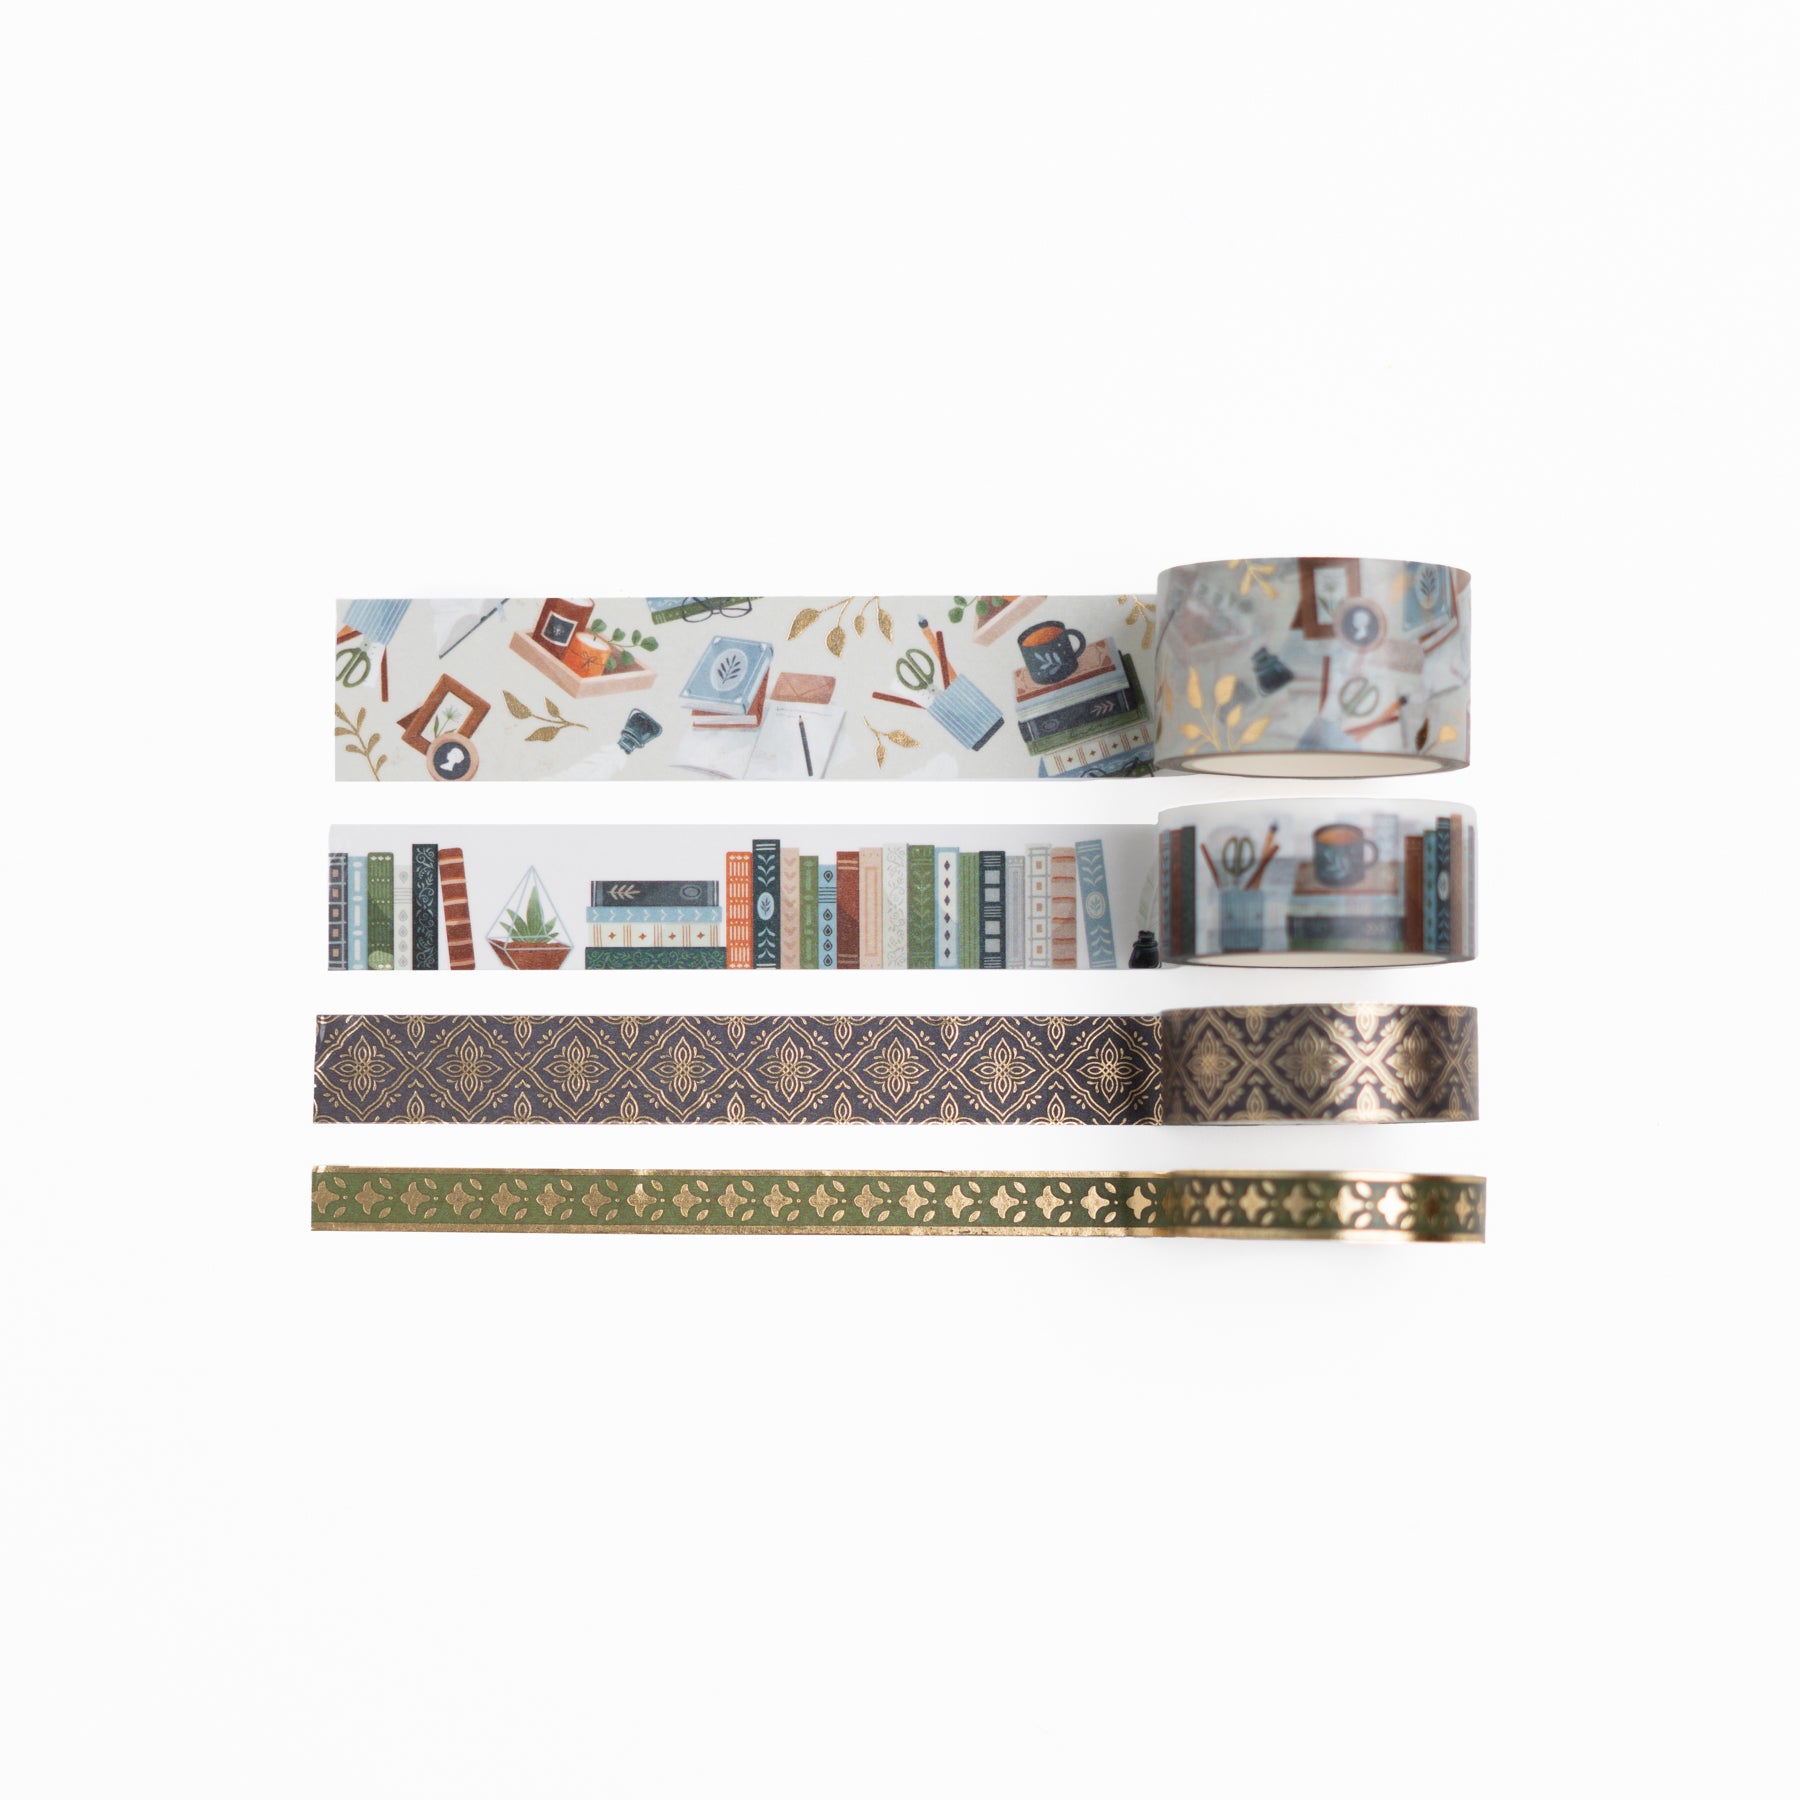 Bookshelf Washi Tape - Treasures & Delights, Etc.